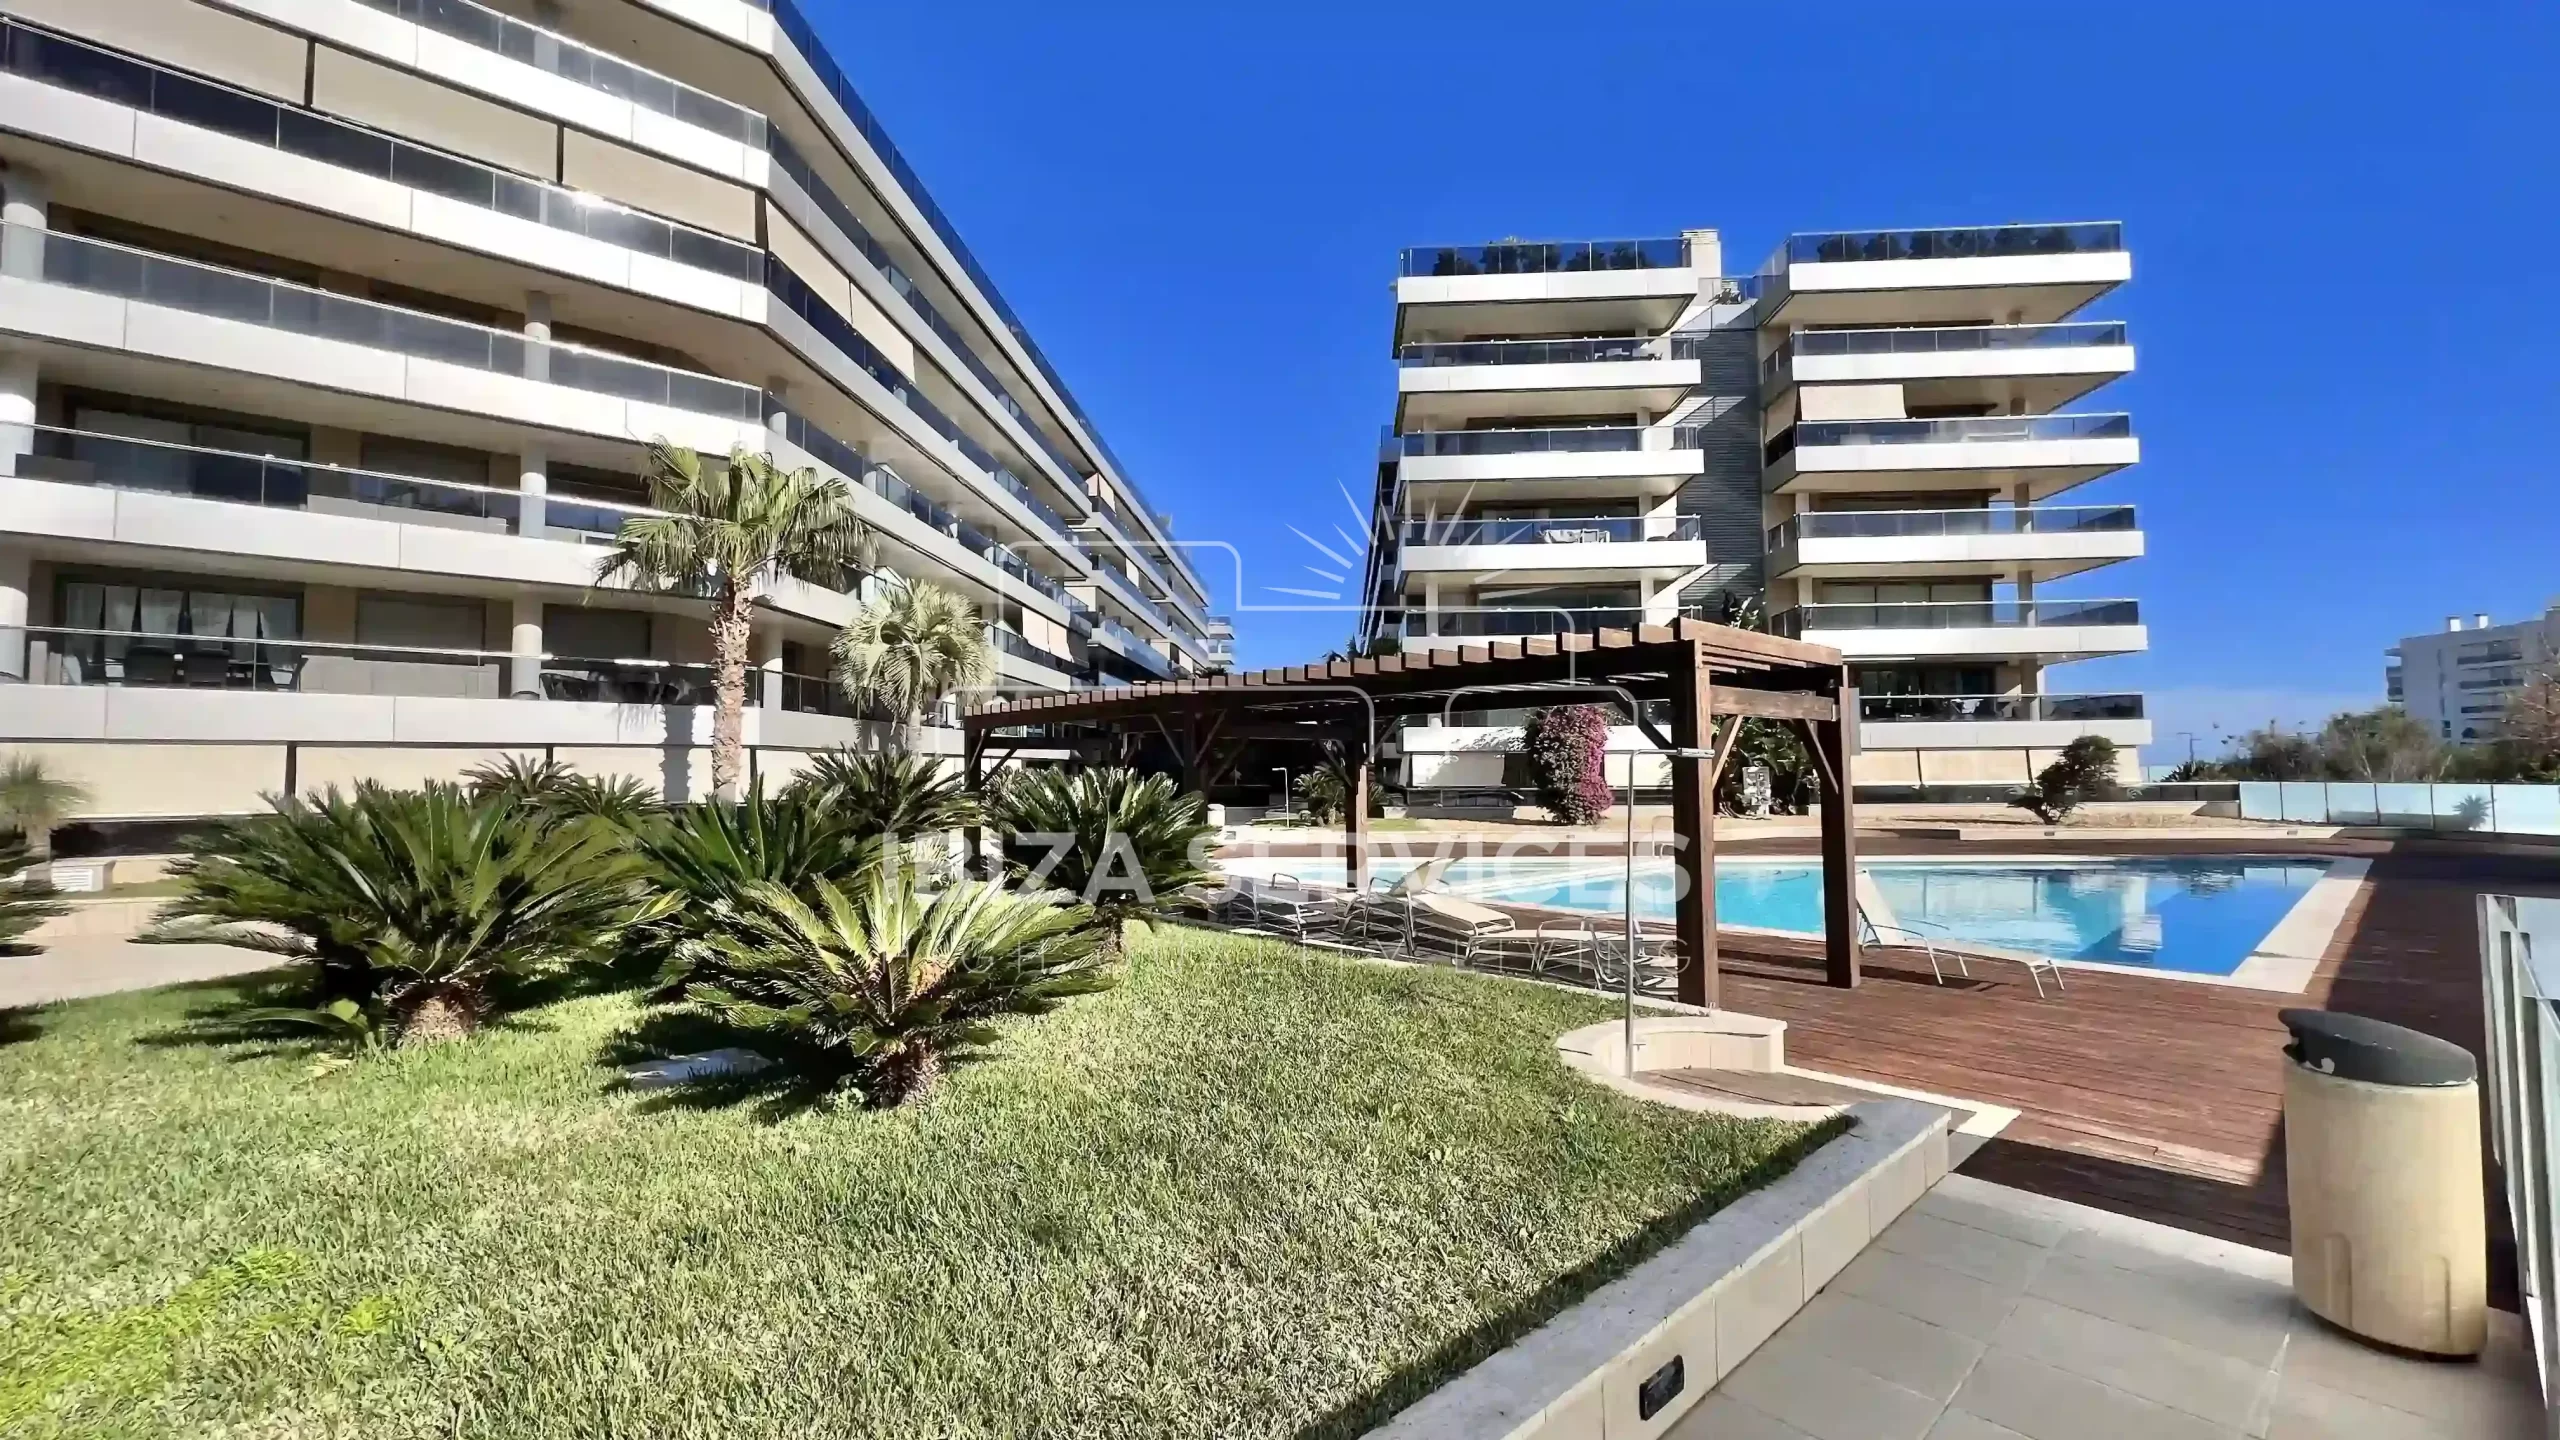 Seasonal Rental 3-Bedroom Apartment with Spacious Sunny Terrace in Nueva Ibiza